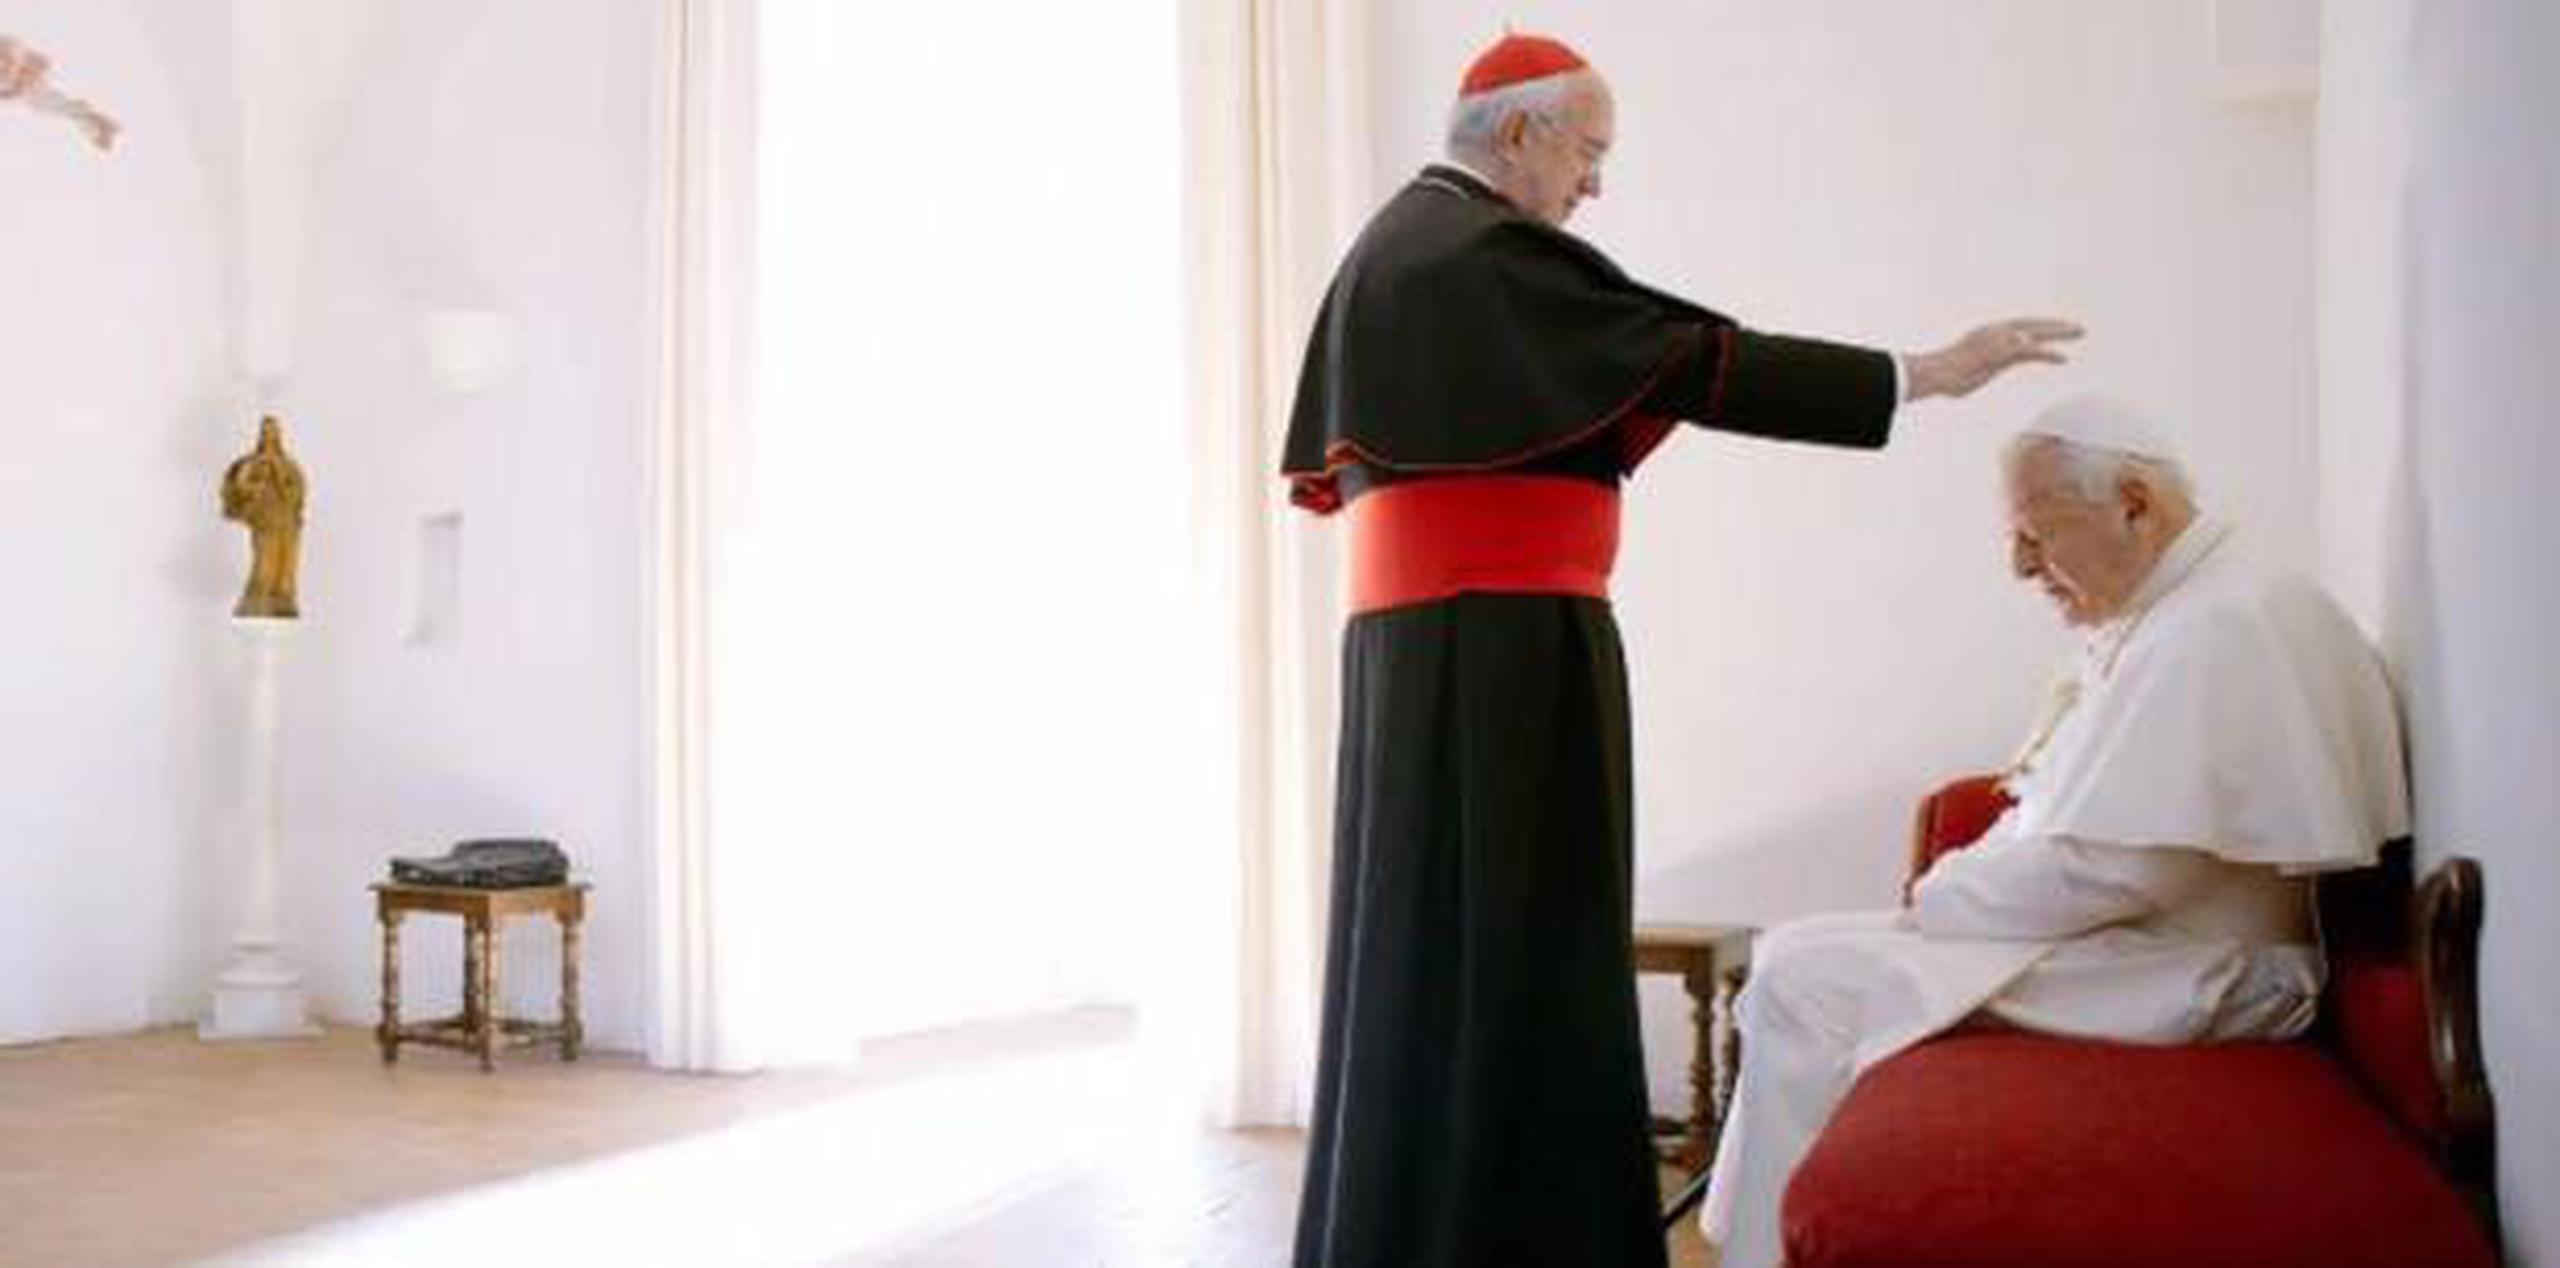 Netflix lanzó el tráiler oficial de “The Two Popes” (Captura de video)